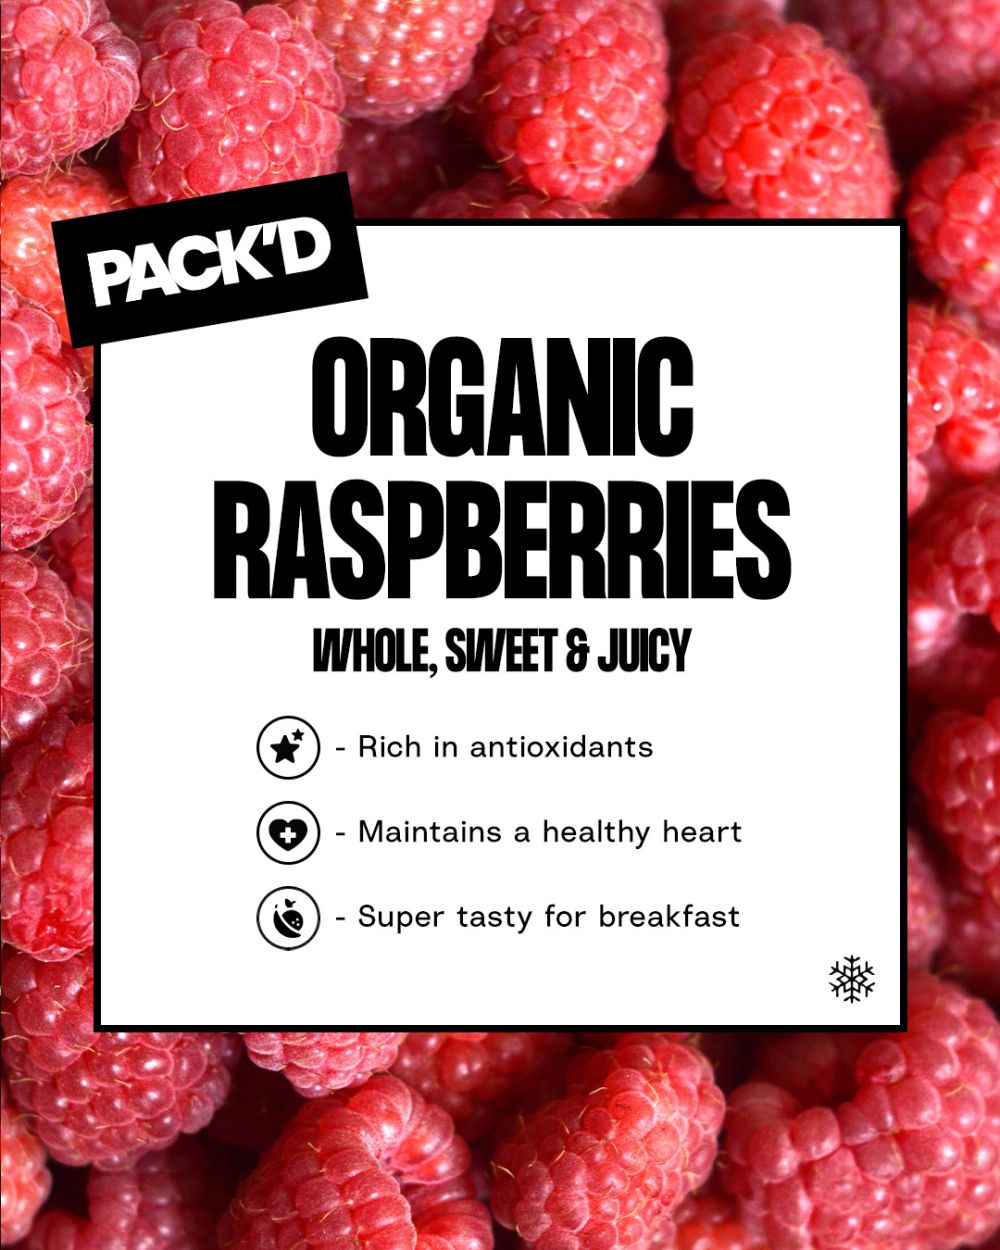 packd_fruits_raspberries.